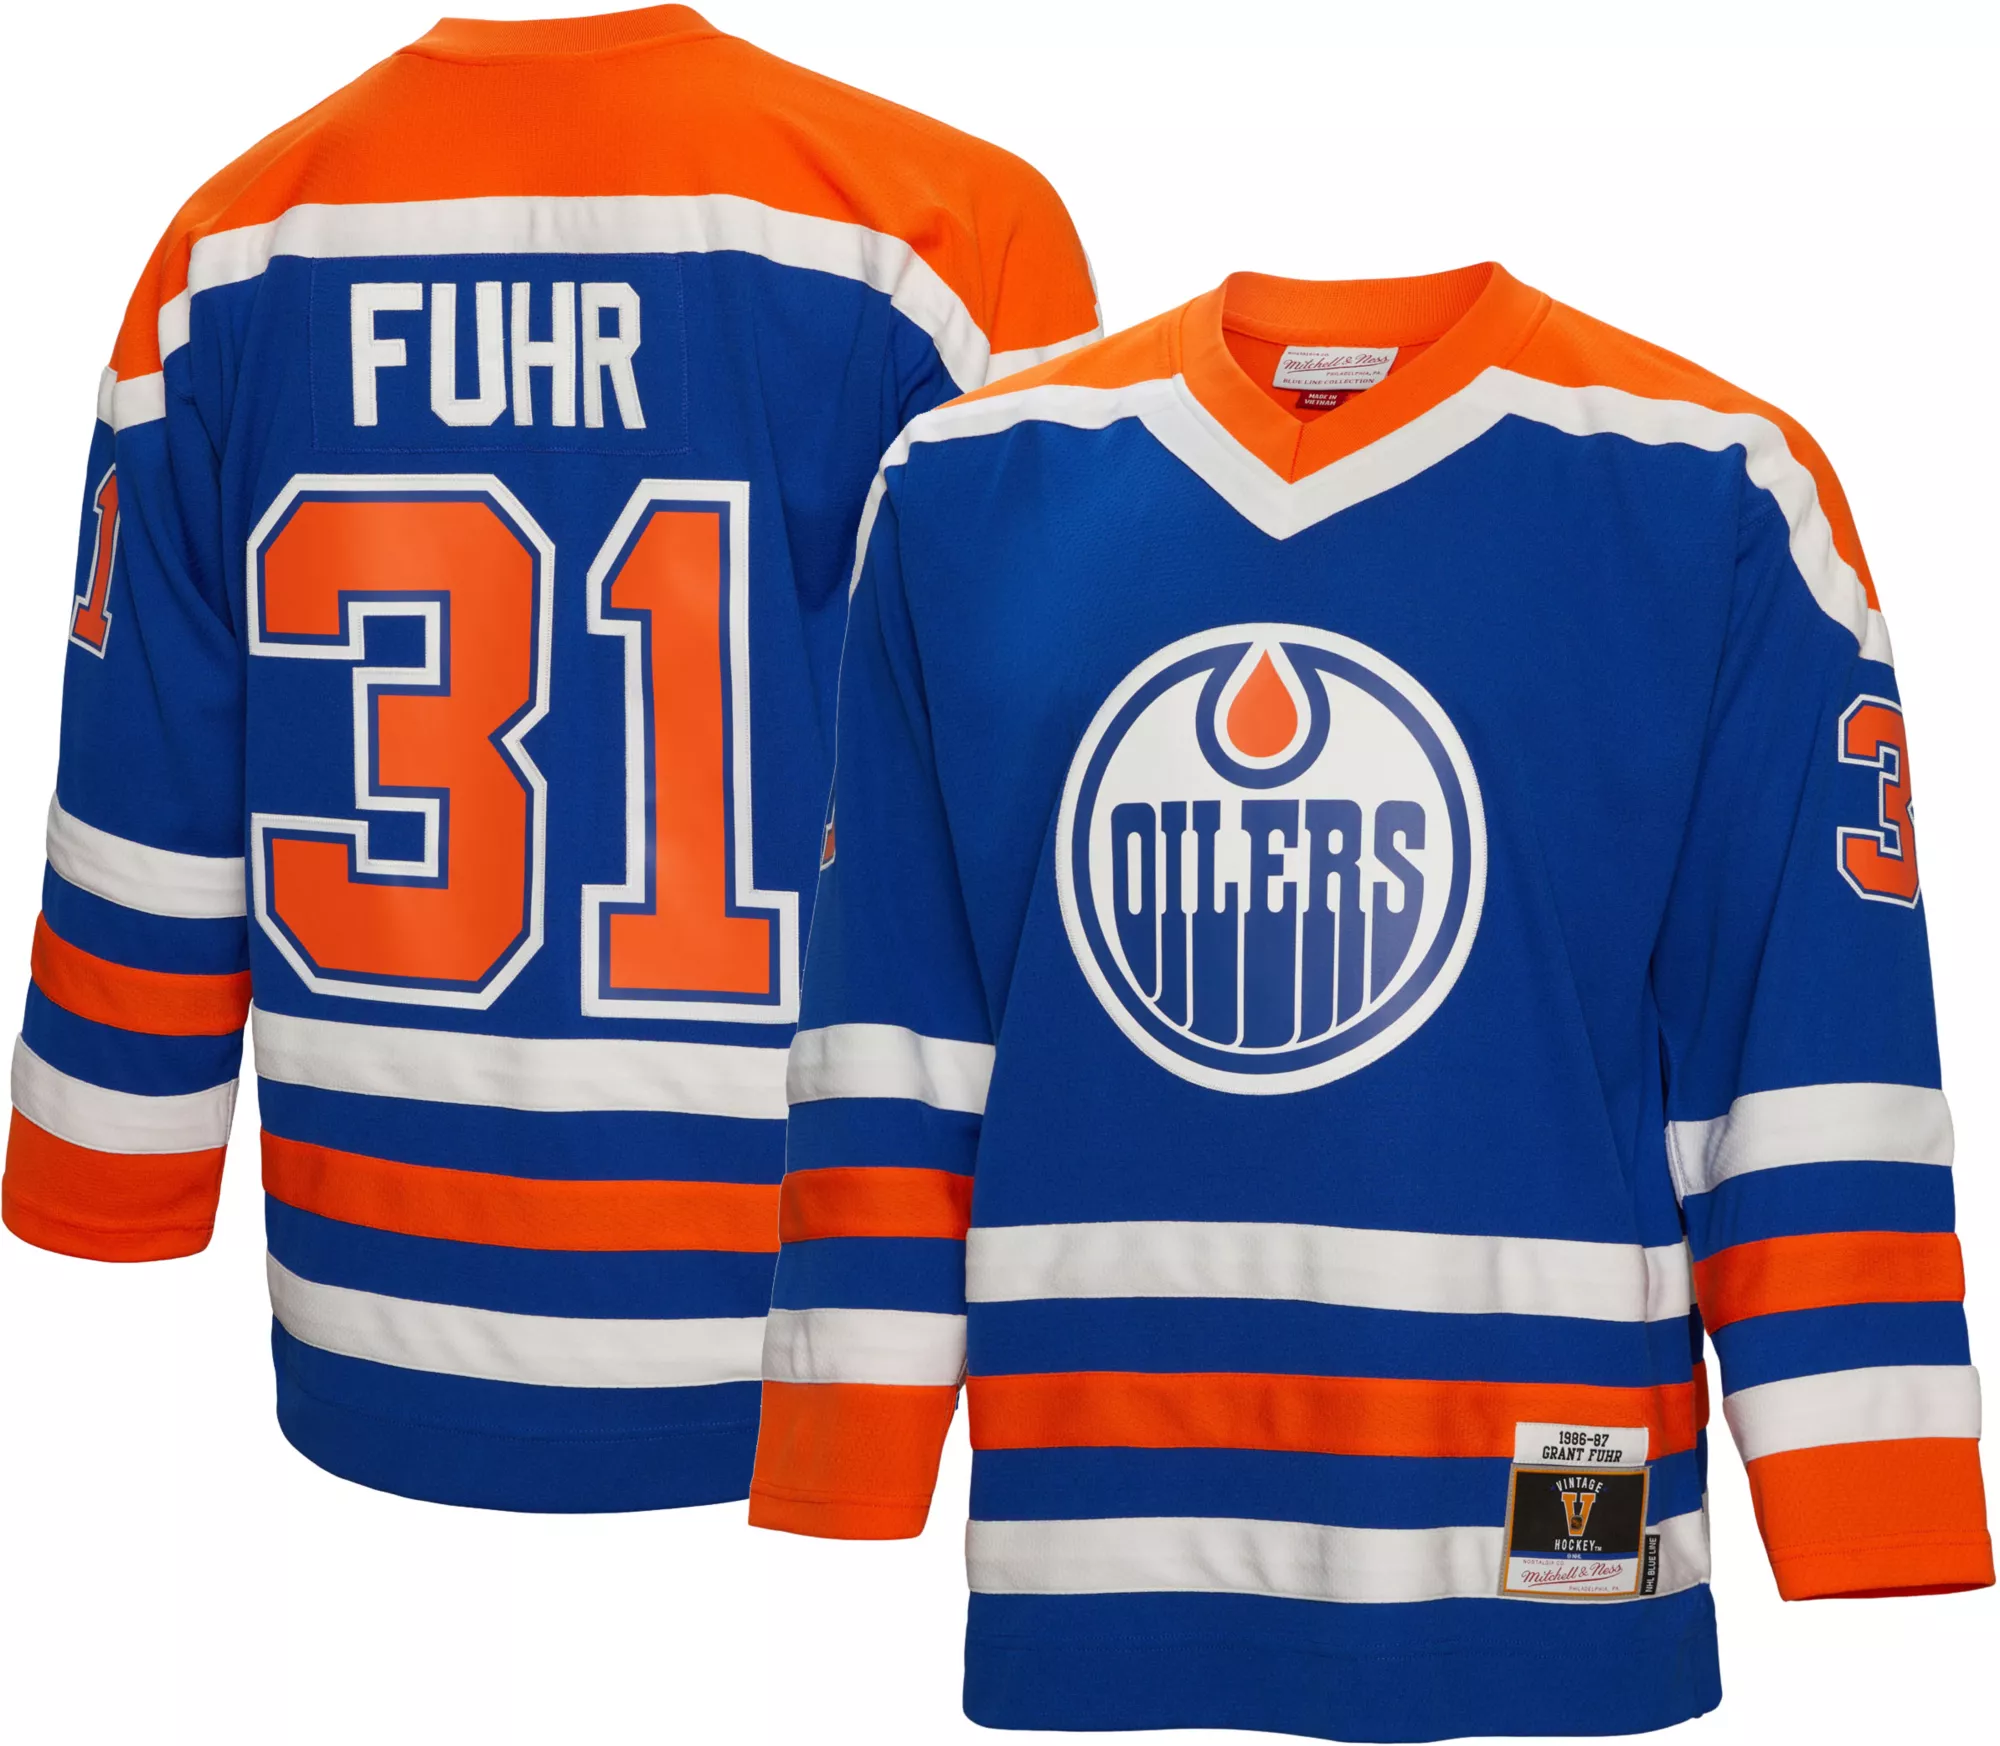 Grant Fuhr #31 - Autographed Edmonton Oilers White Nike Replica